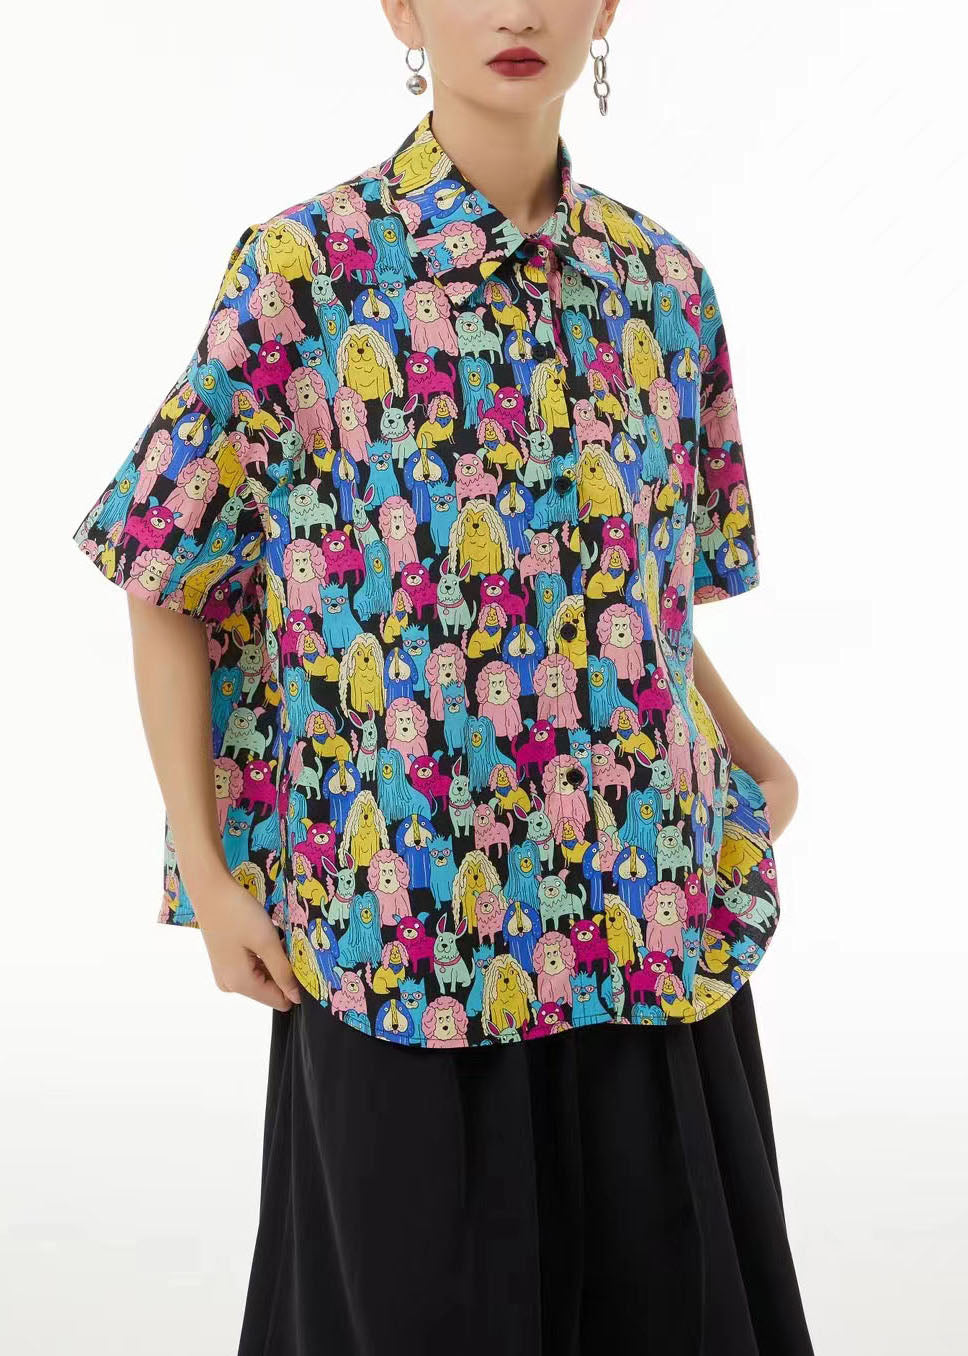 Women Khaki Peter Pan Collar Animal Print Cotton Blouses Summer LC0159 - fabuloryshop